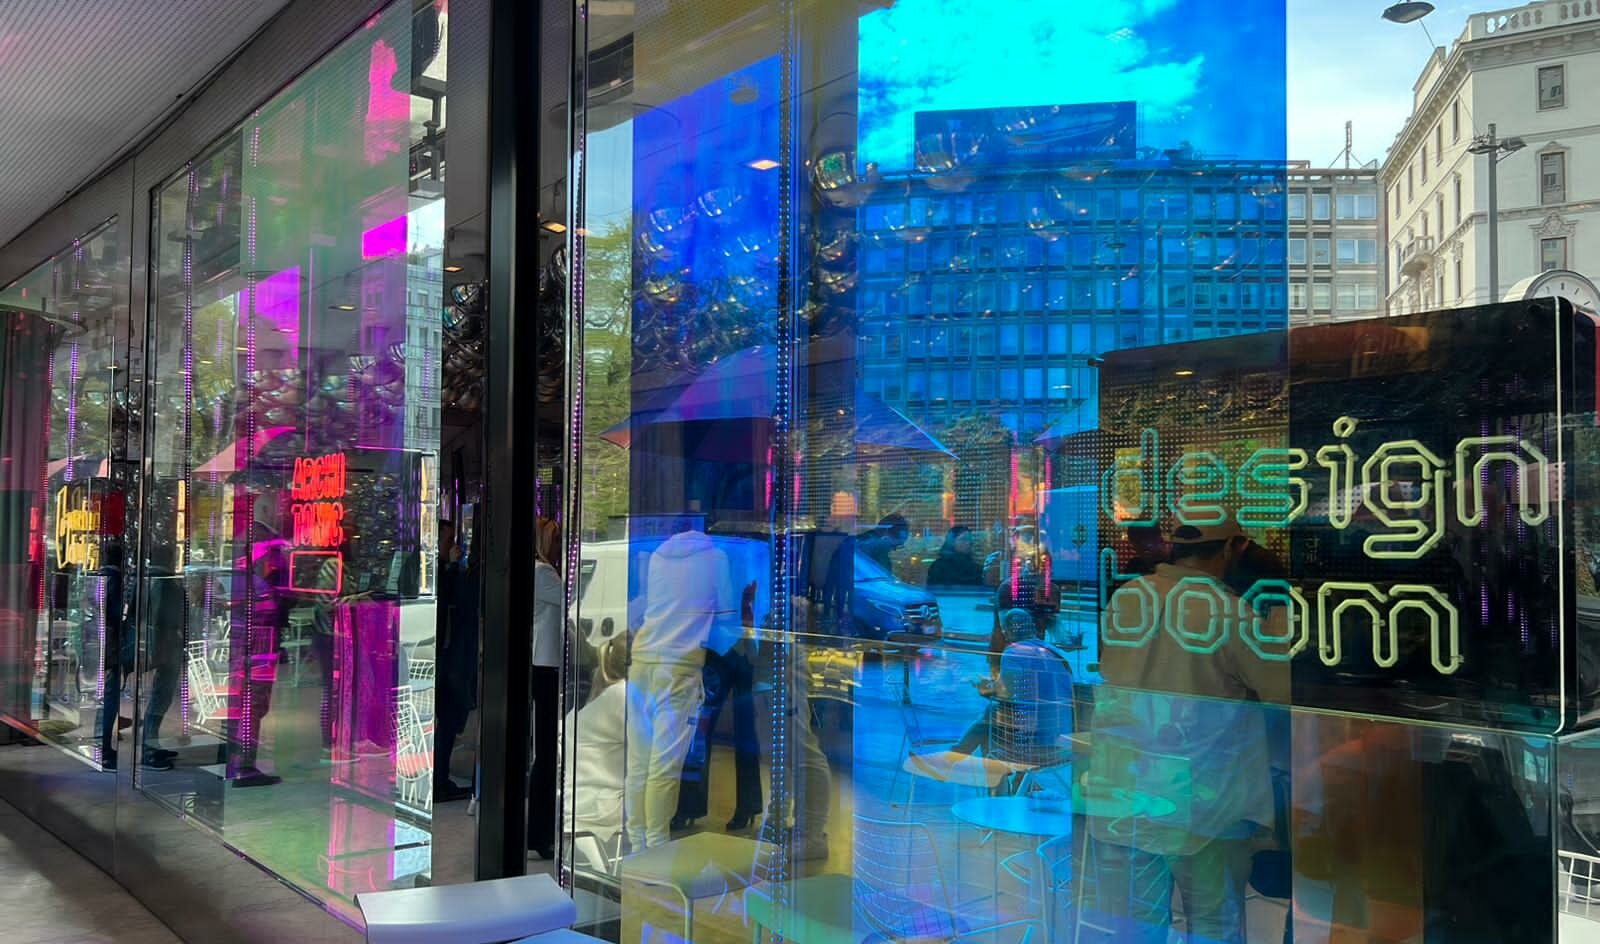 Louis Vuitton Bag In A Shop Window In Via Montenapoleone Stock